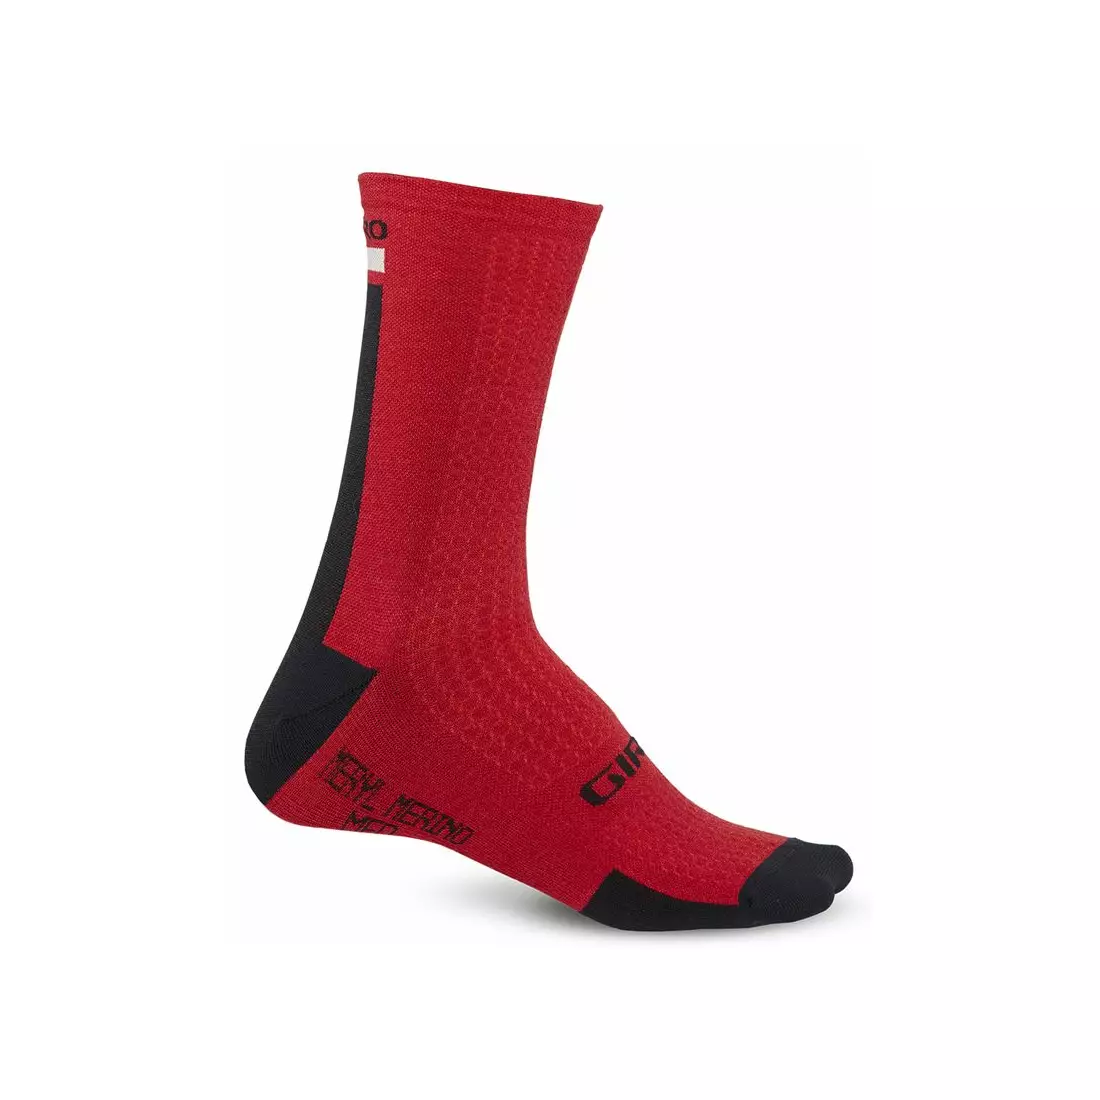 GIRO cycling socks hrc + merino wool dark red black grey GR-7085804